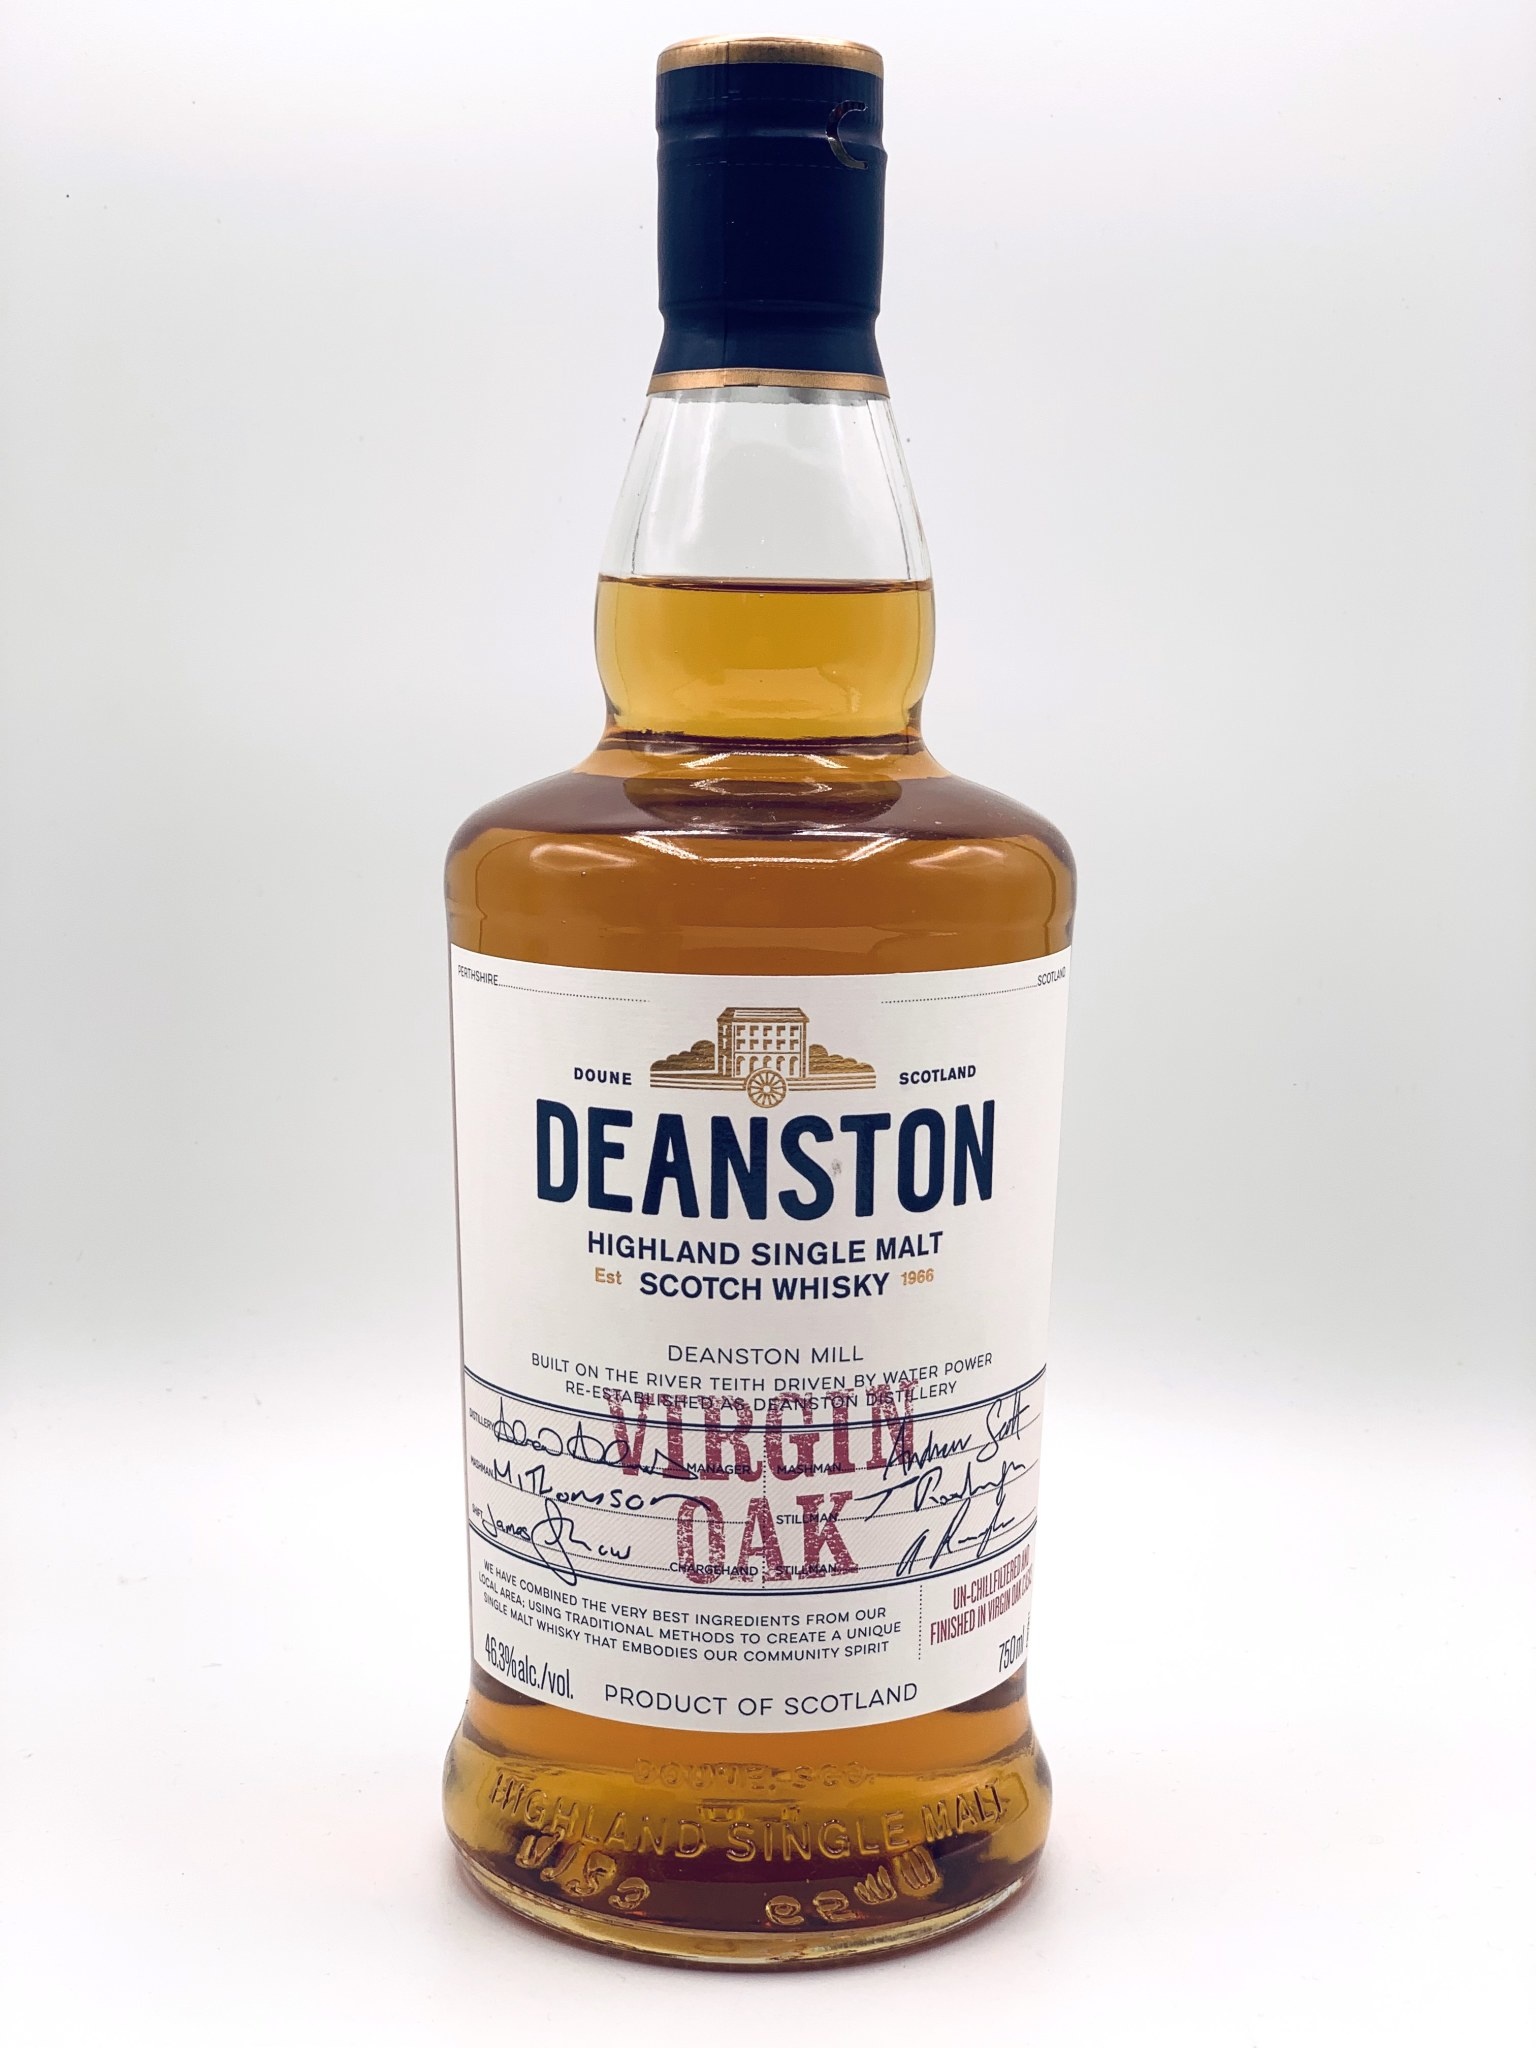 Deanston 5yr Highland Single Malt Scotch Whisky 750ml (92.6 Proof)